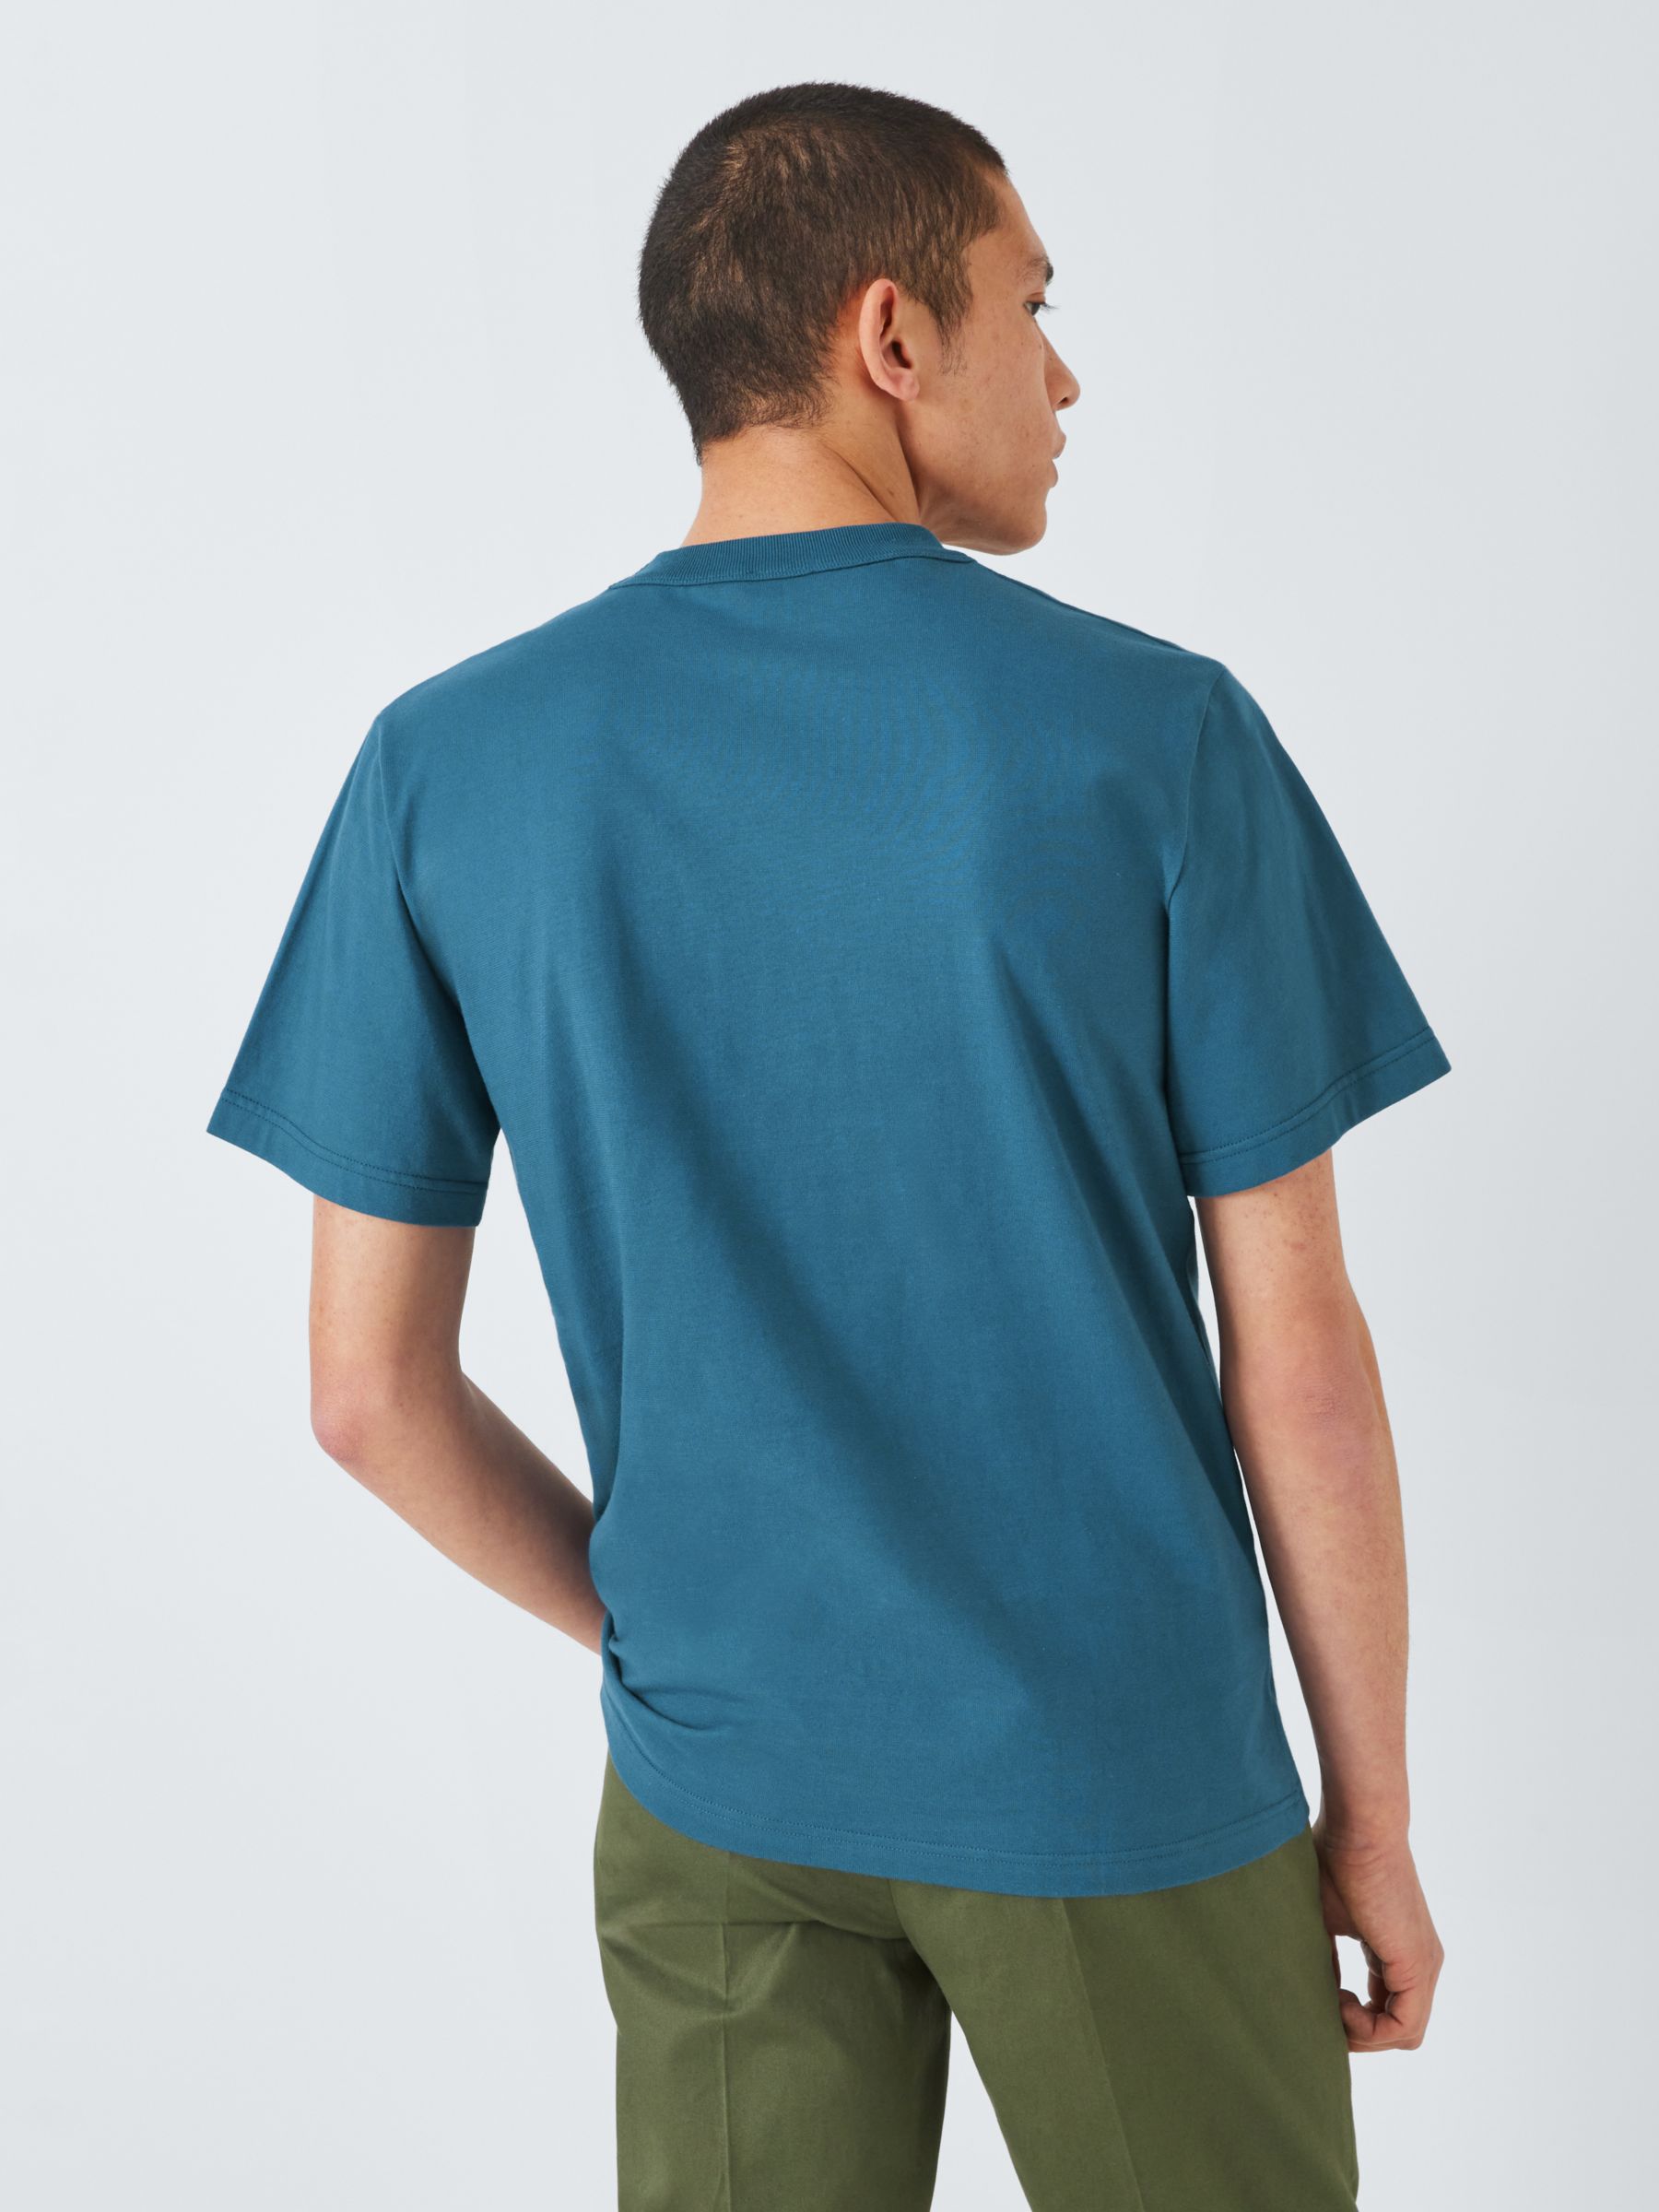 Buy Armor Lux x Denham Comfort Fit Plain Short Sleeve T-Shirt Online at johnlewis.com